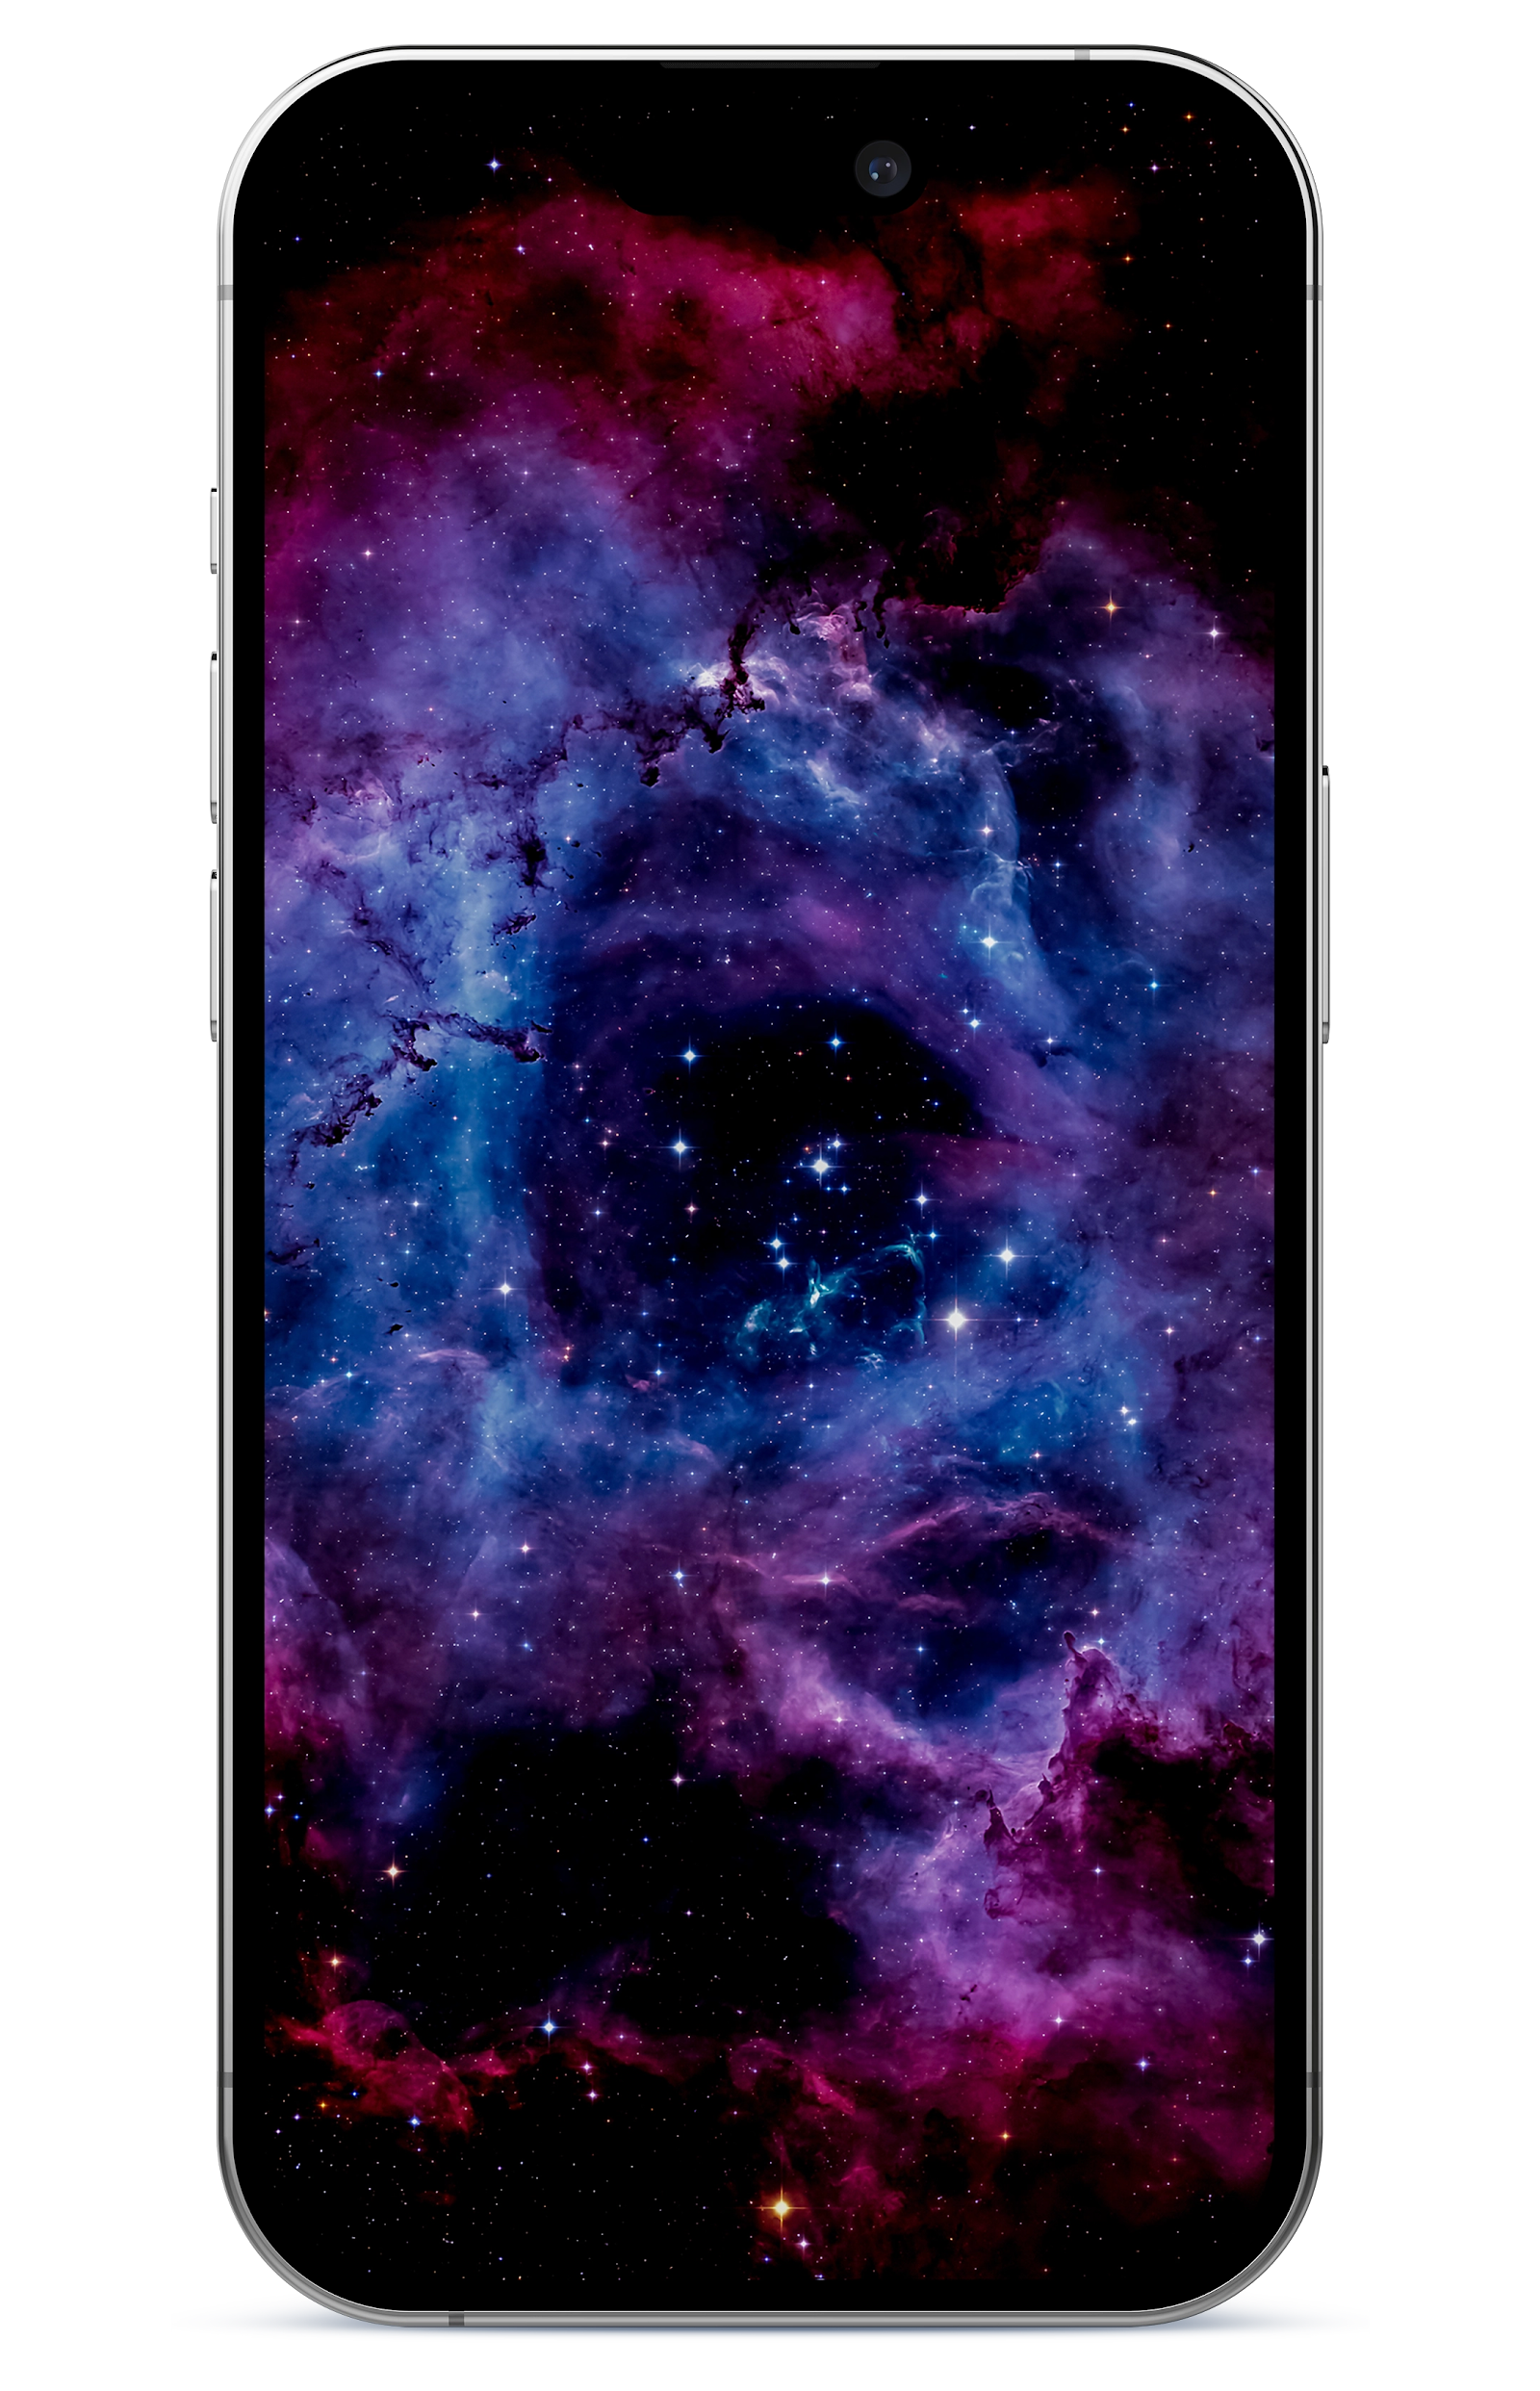 110 Rosette Nebula Stock Photos Pictures  RoyaltyFree Images  iStock   The rosette nebula